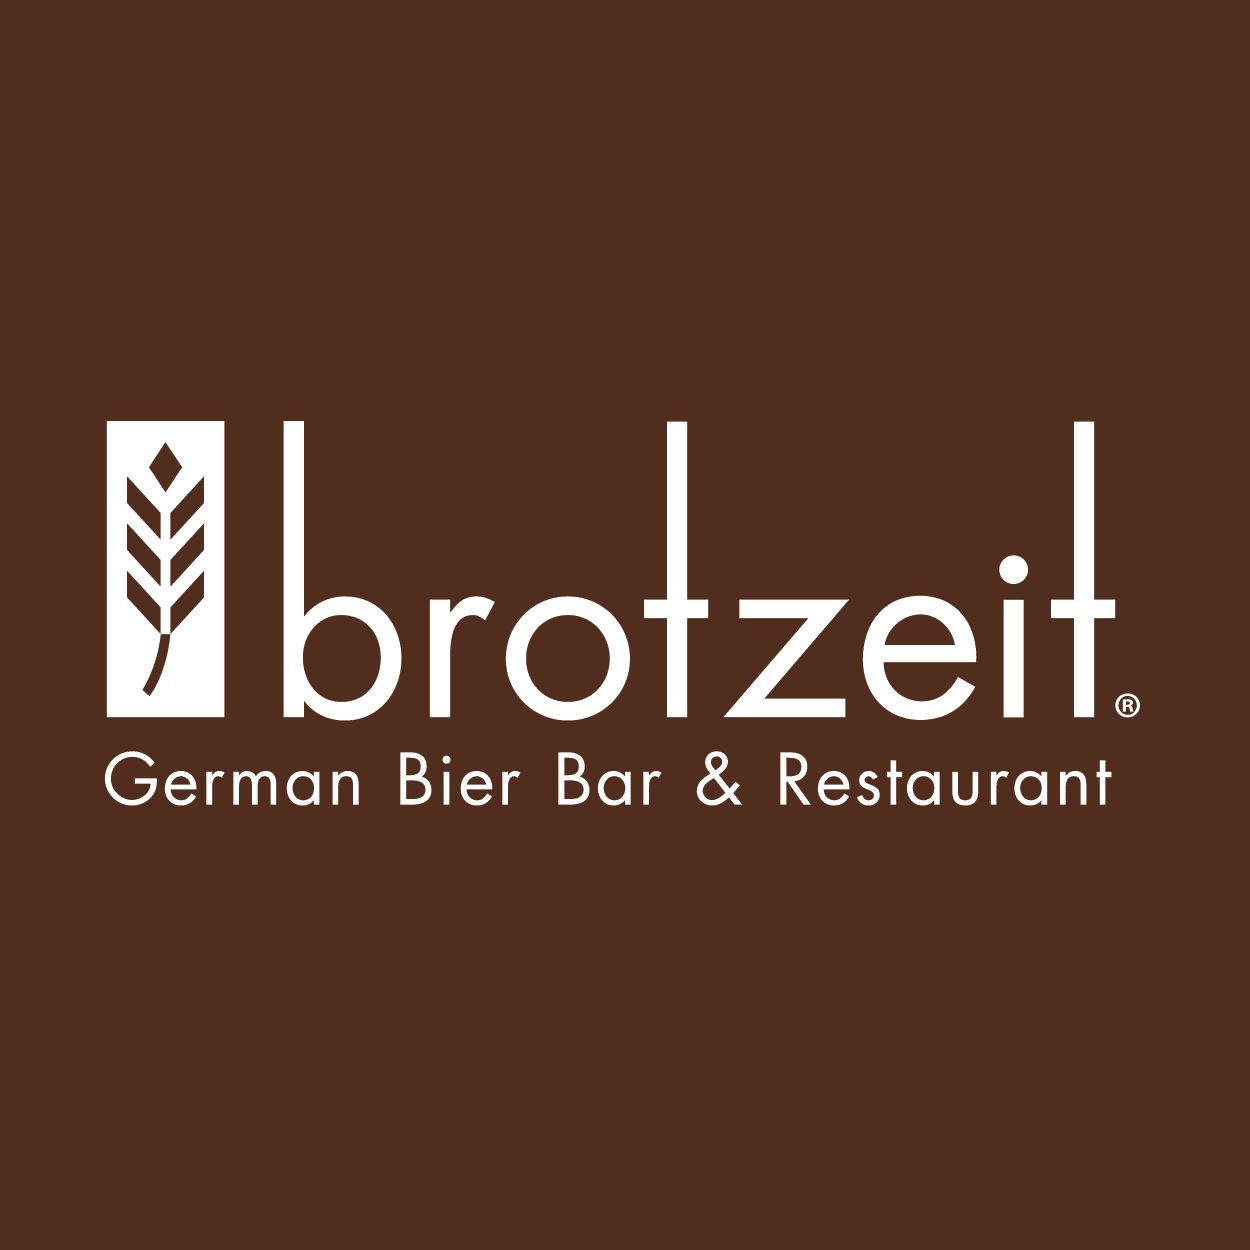 brotzeit German Bier Bar & Restaurant (暫停營業)